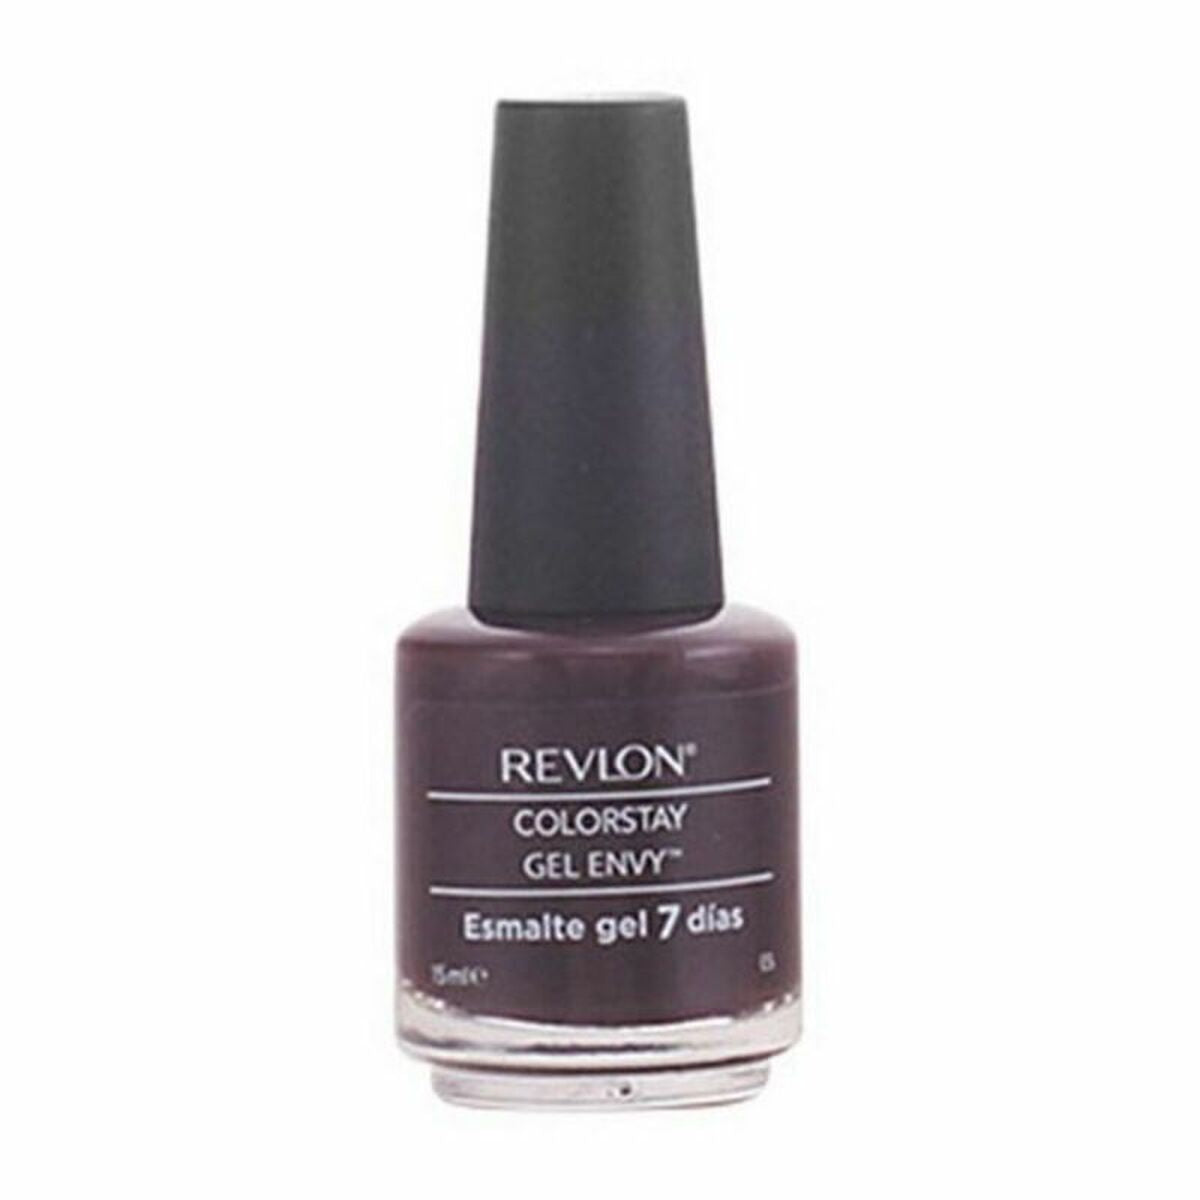 nail polish Colorstay Gel Envy Revlon - Calm Beauty IE